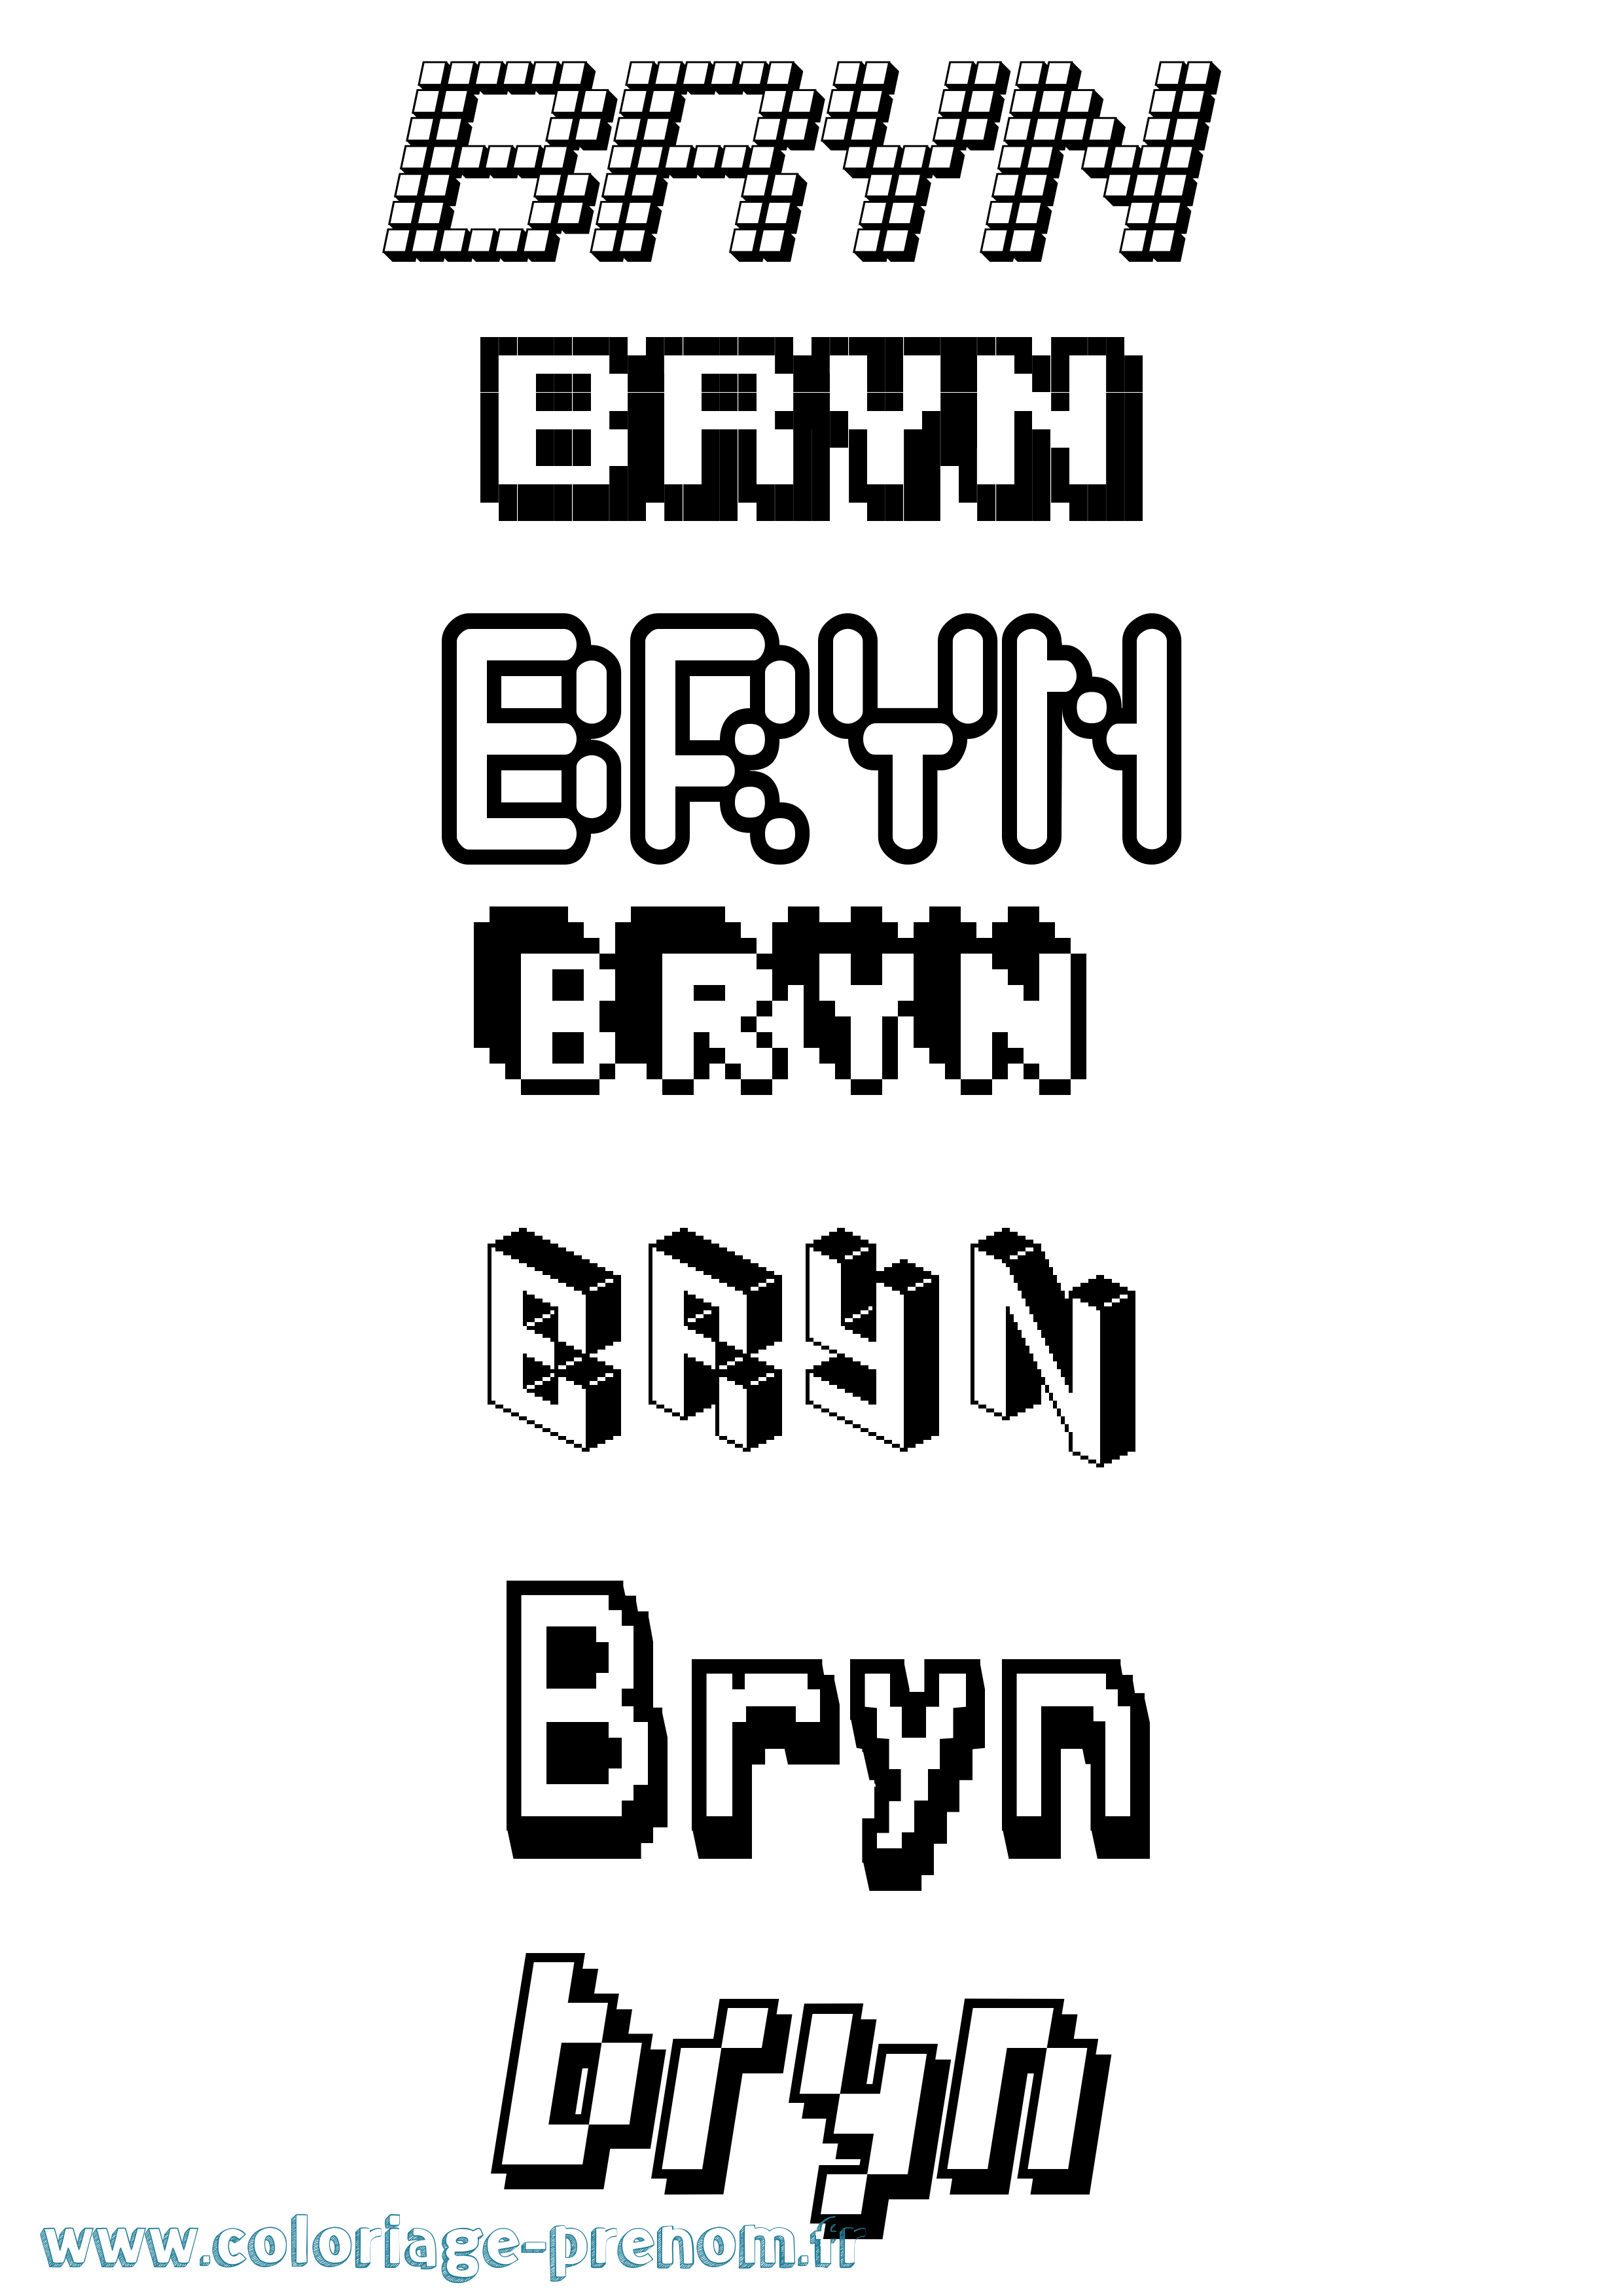 Coloriage prénom Bryn Pixel